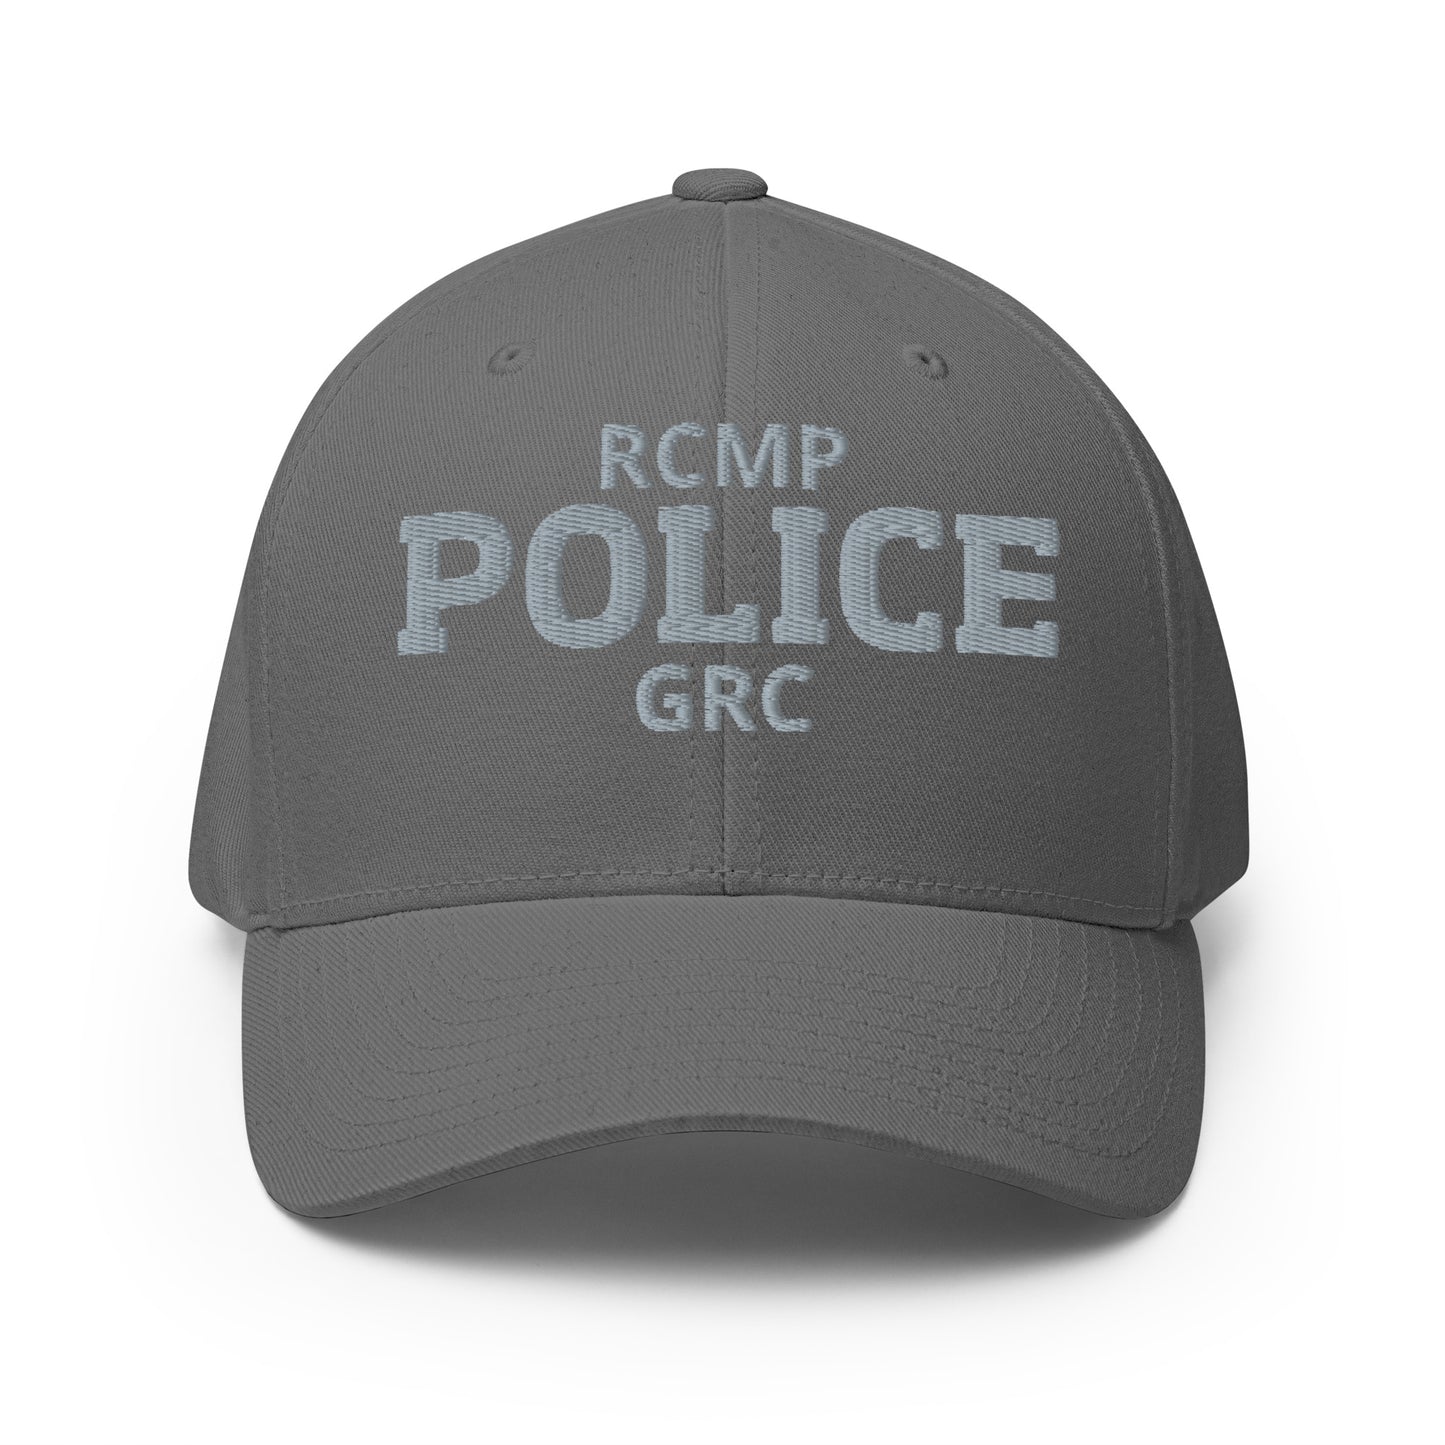 Royal Canadian Mounted Police (RCMP POLICE GRC) Duty Flexfit Ballcap